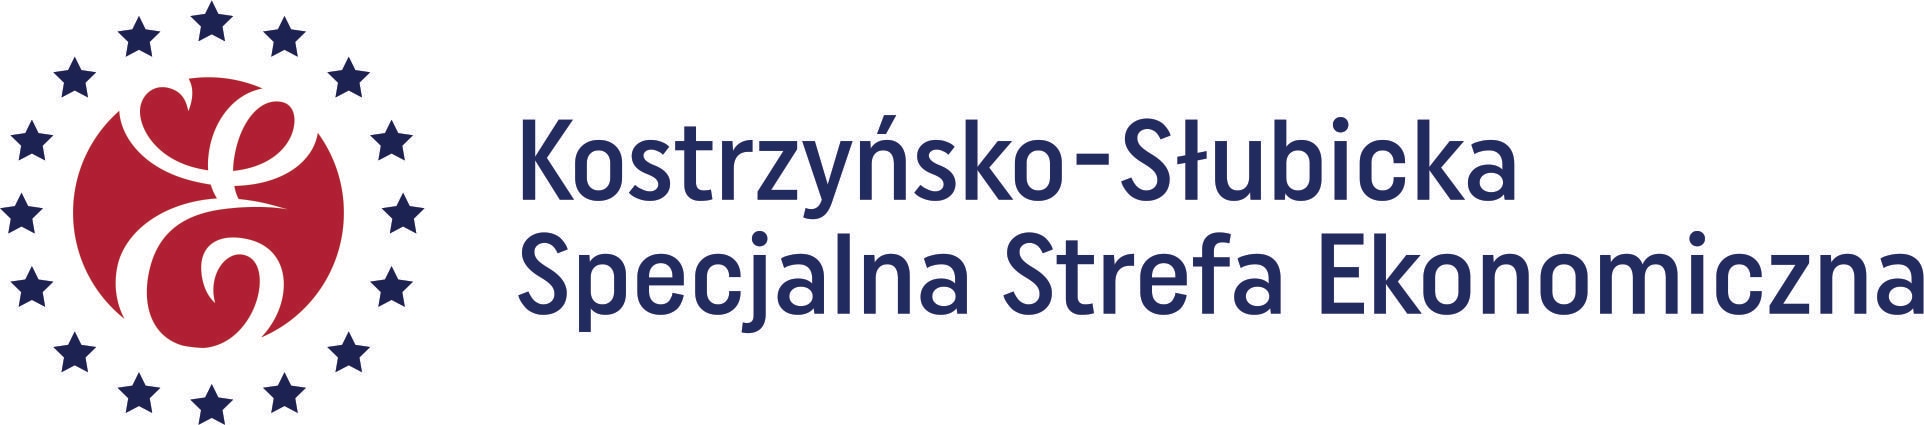 Logo-Kostrzynsko-Slubicka-Specjalna-Strefa-Ekonomiczna.jpg (1924×425)